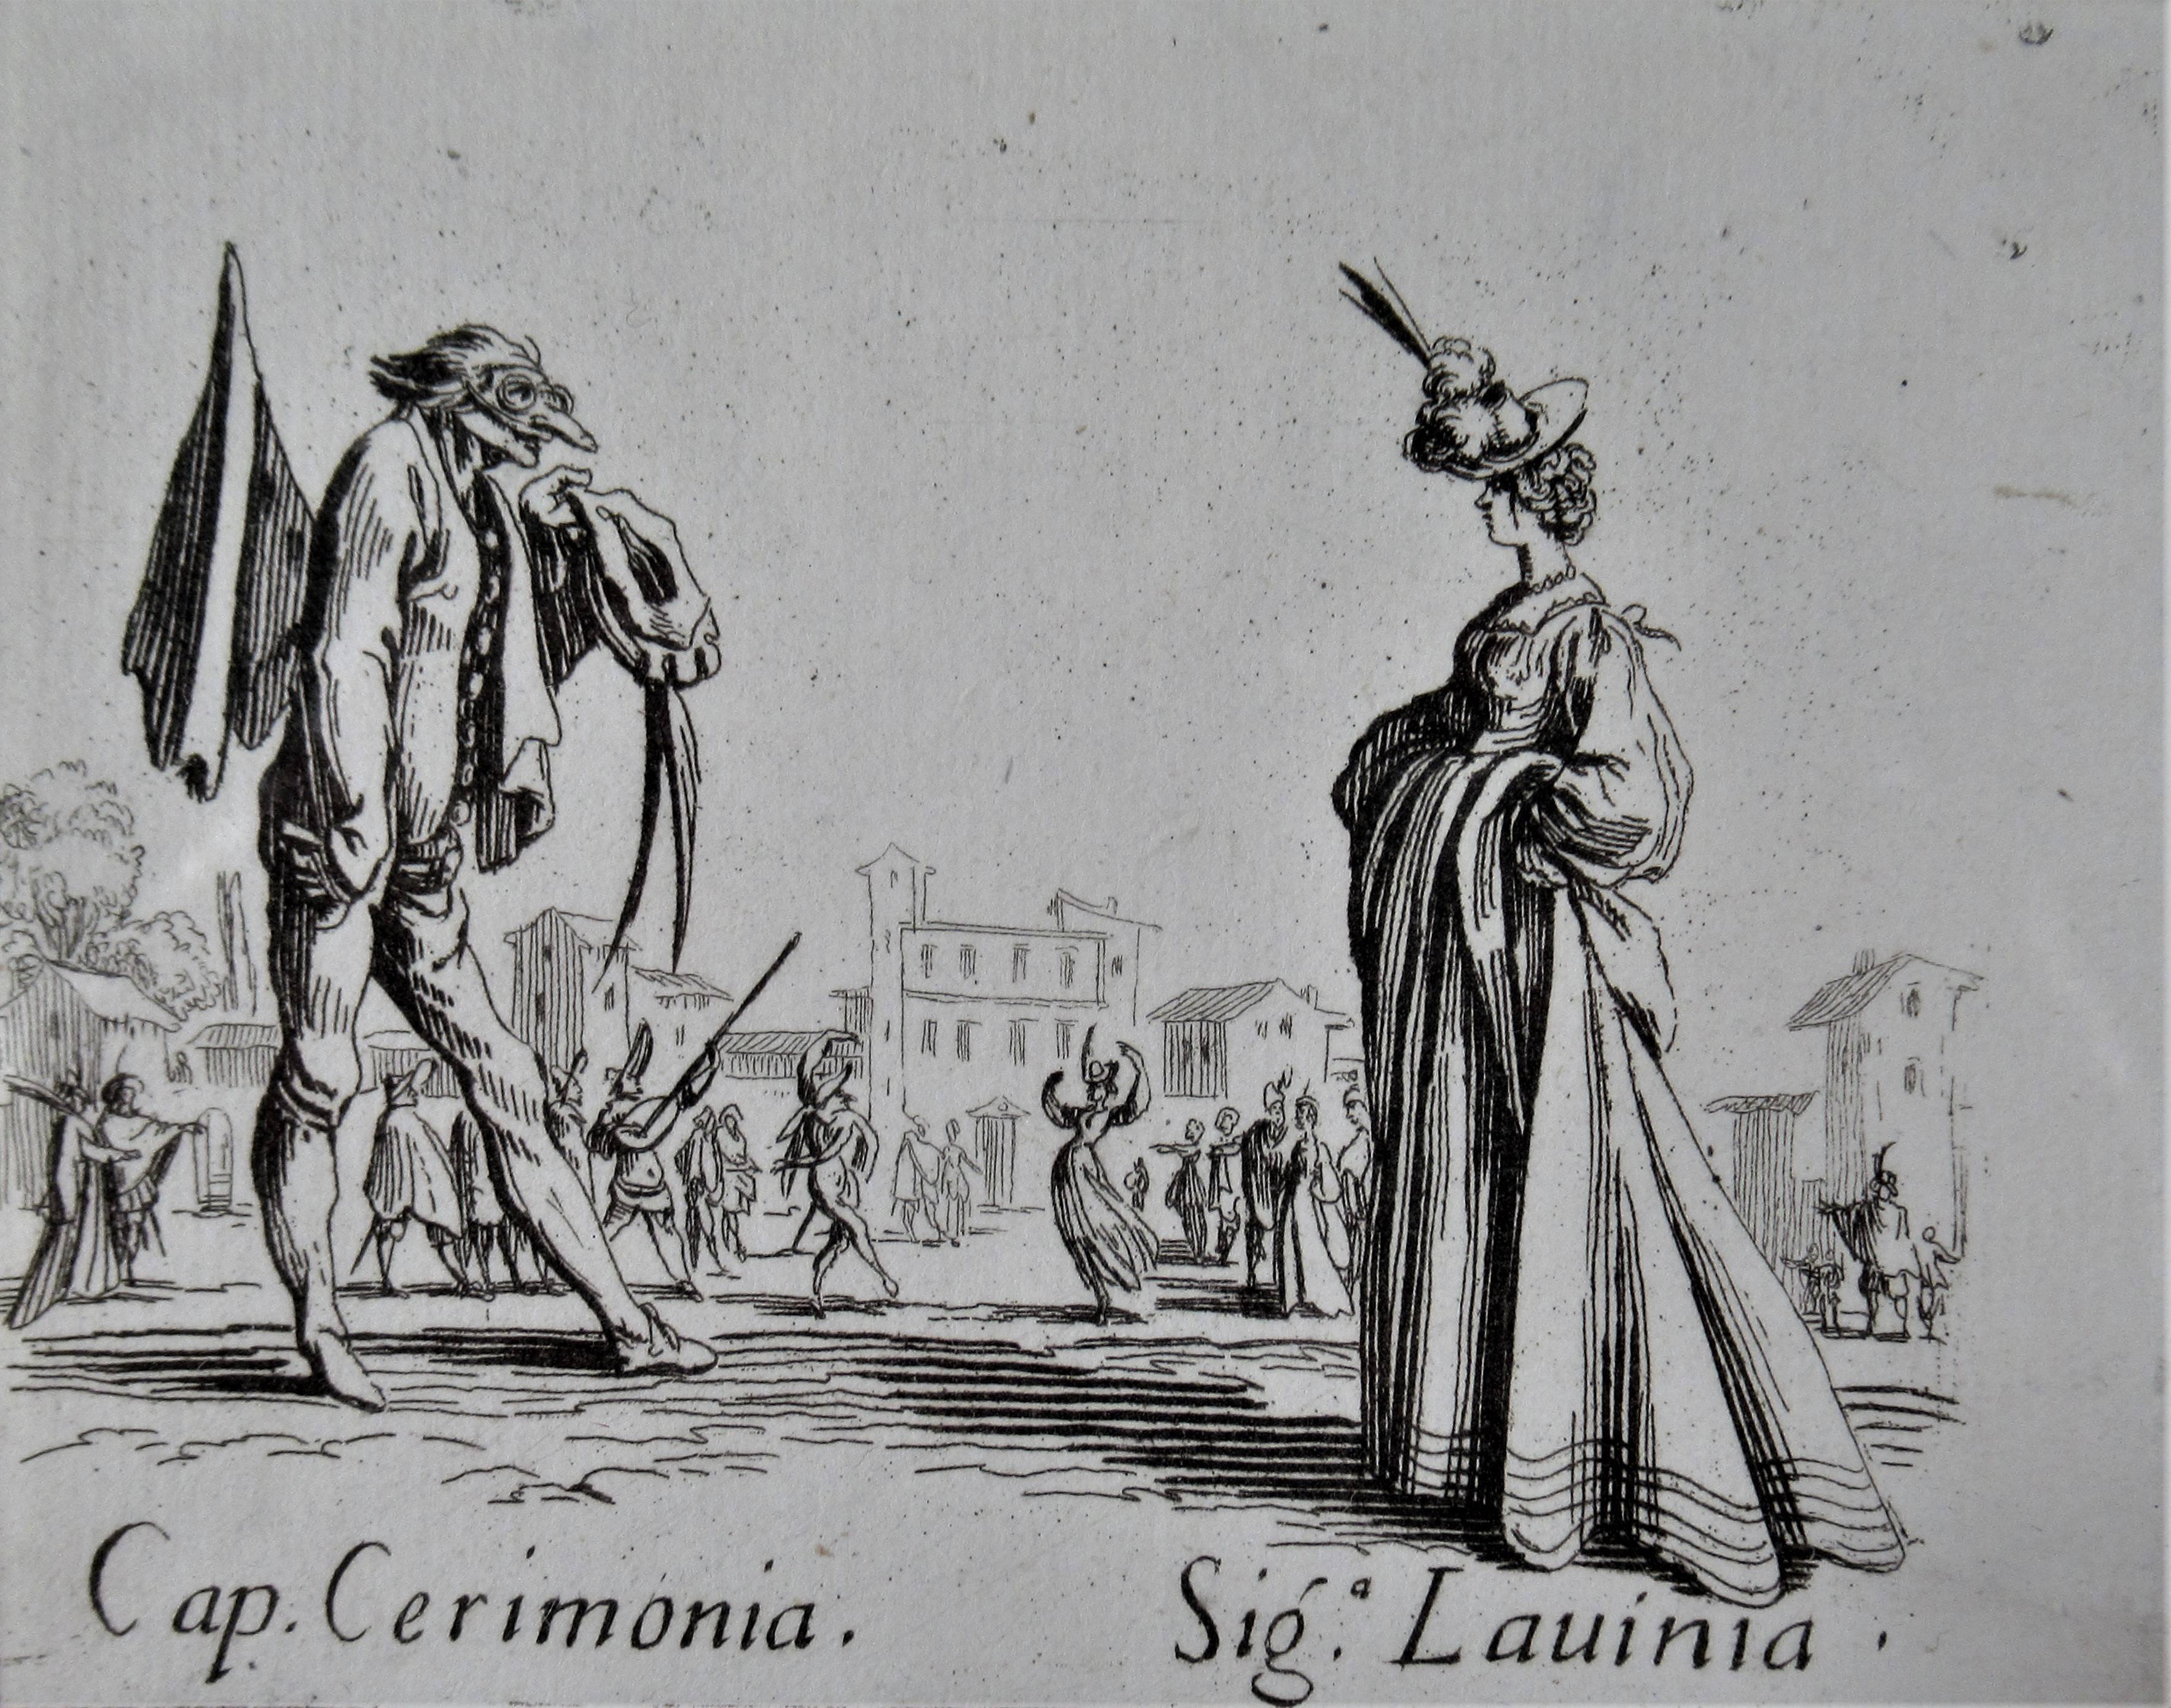 Cap. Cerimonia, Sig. Lauinia - Print by Jacques Callot